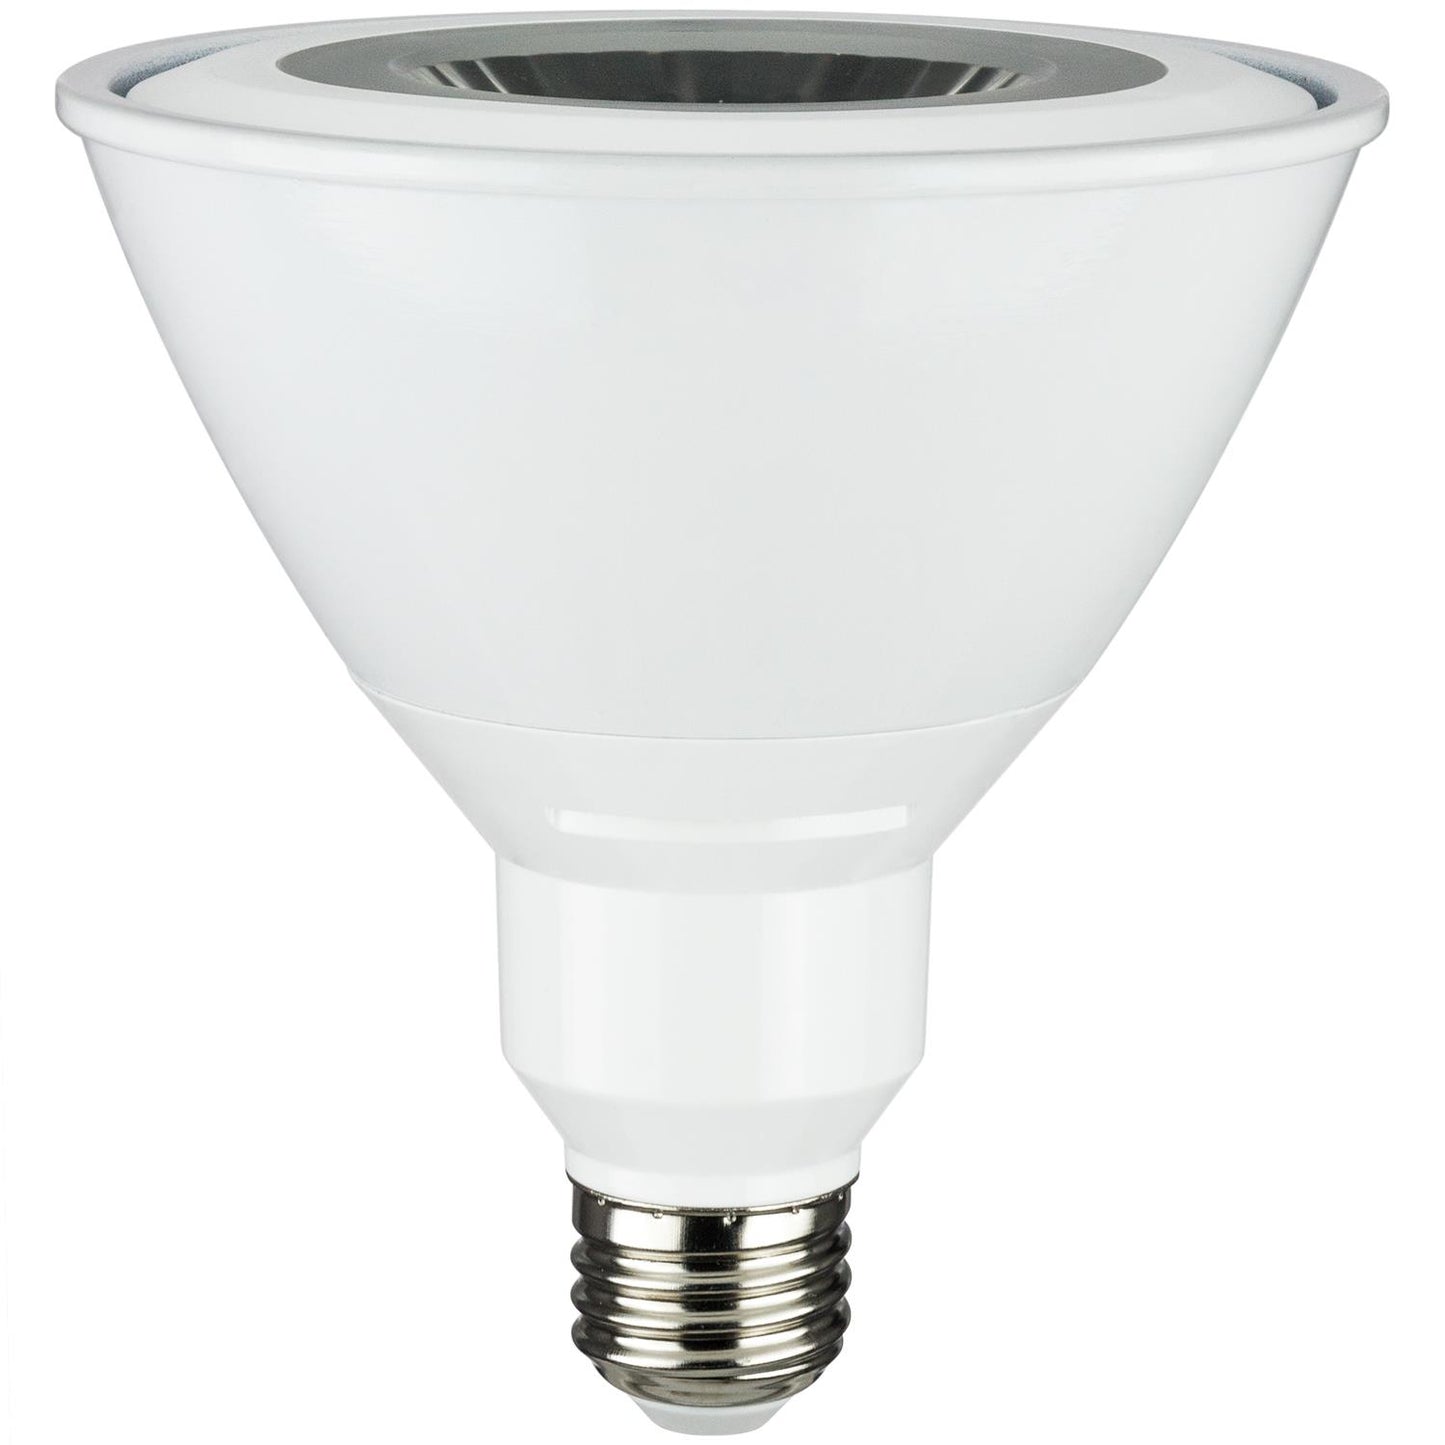 Sunlite LED PAR38 Reflector 90cri Series 17W (120W Equivalent) Light Bulb Medium (E26) Base, Warm White